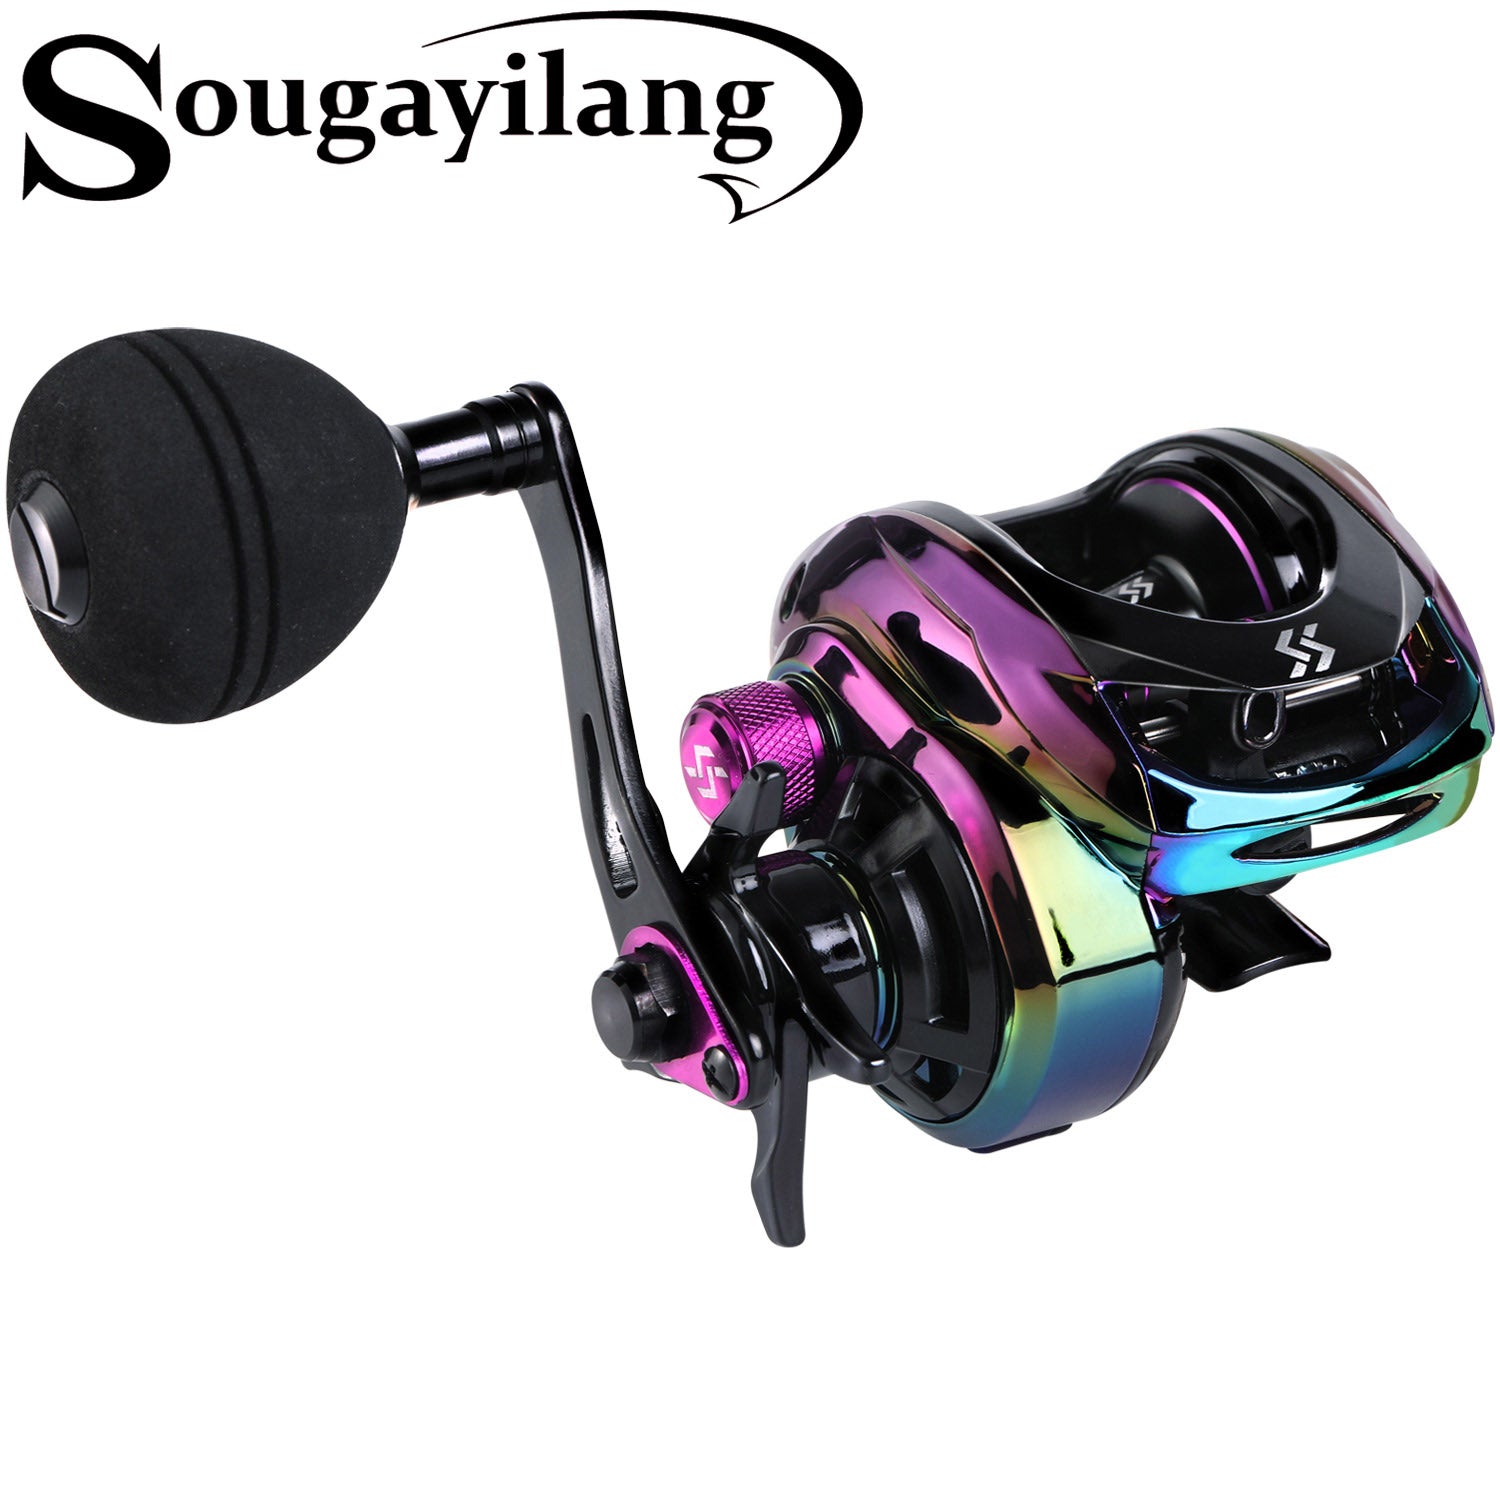 Sougayilang Baitcasting Reels - Colorful Fishing Reel, High Speed Bai